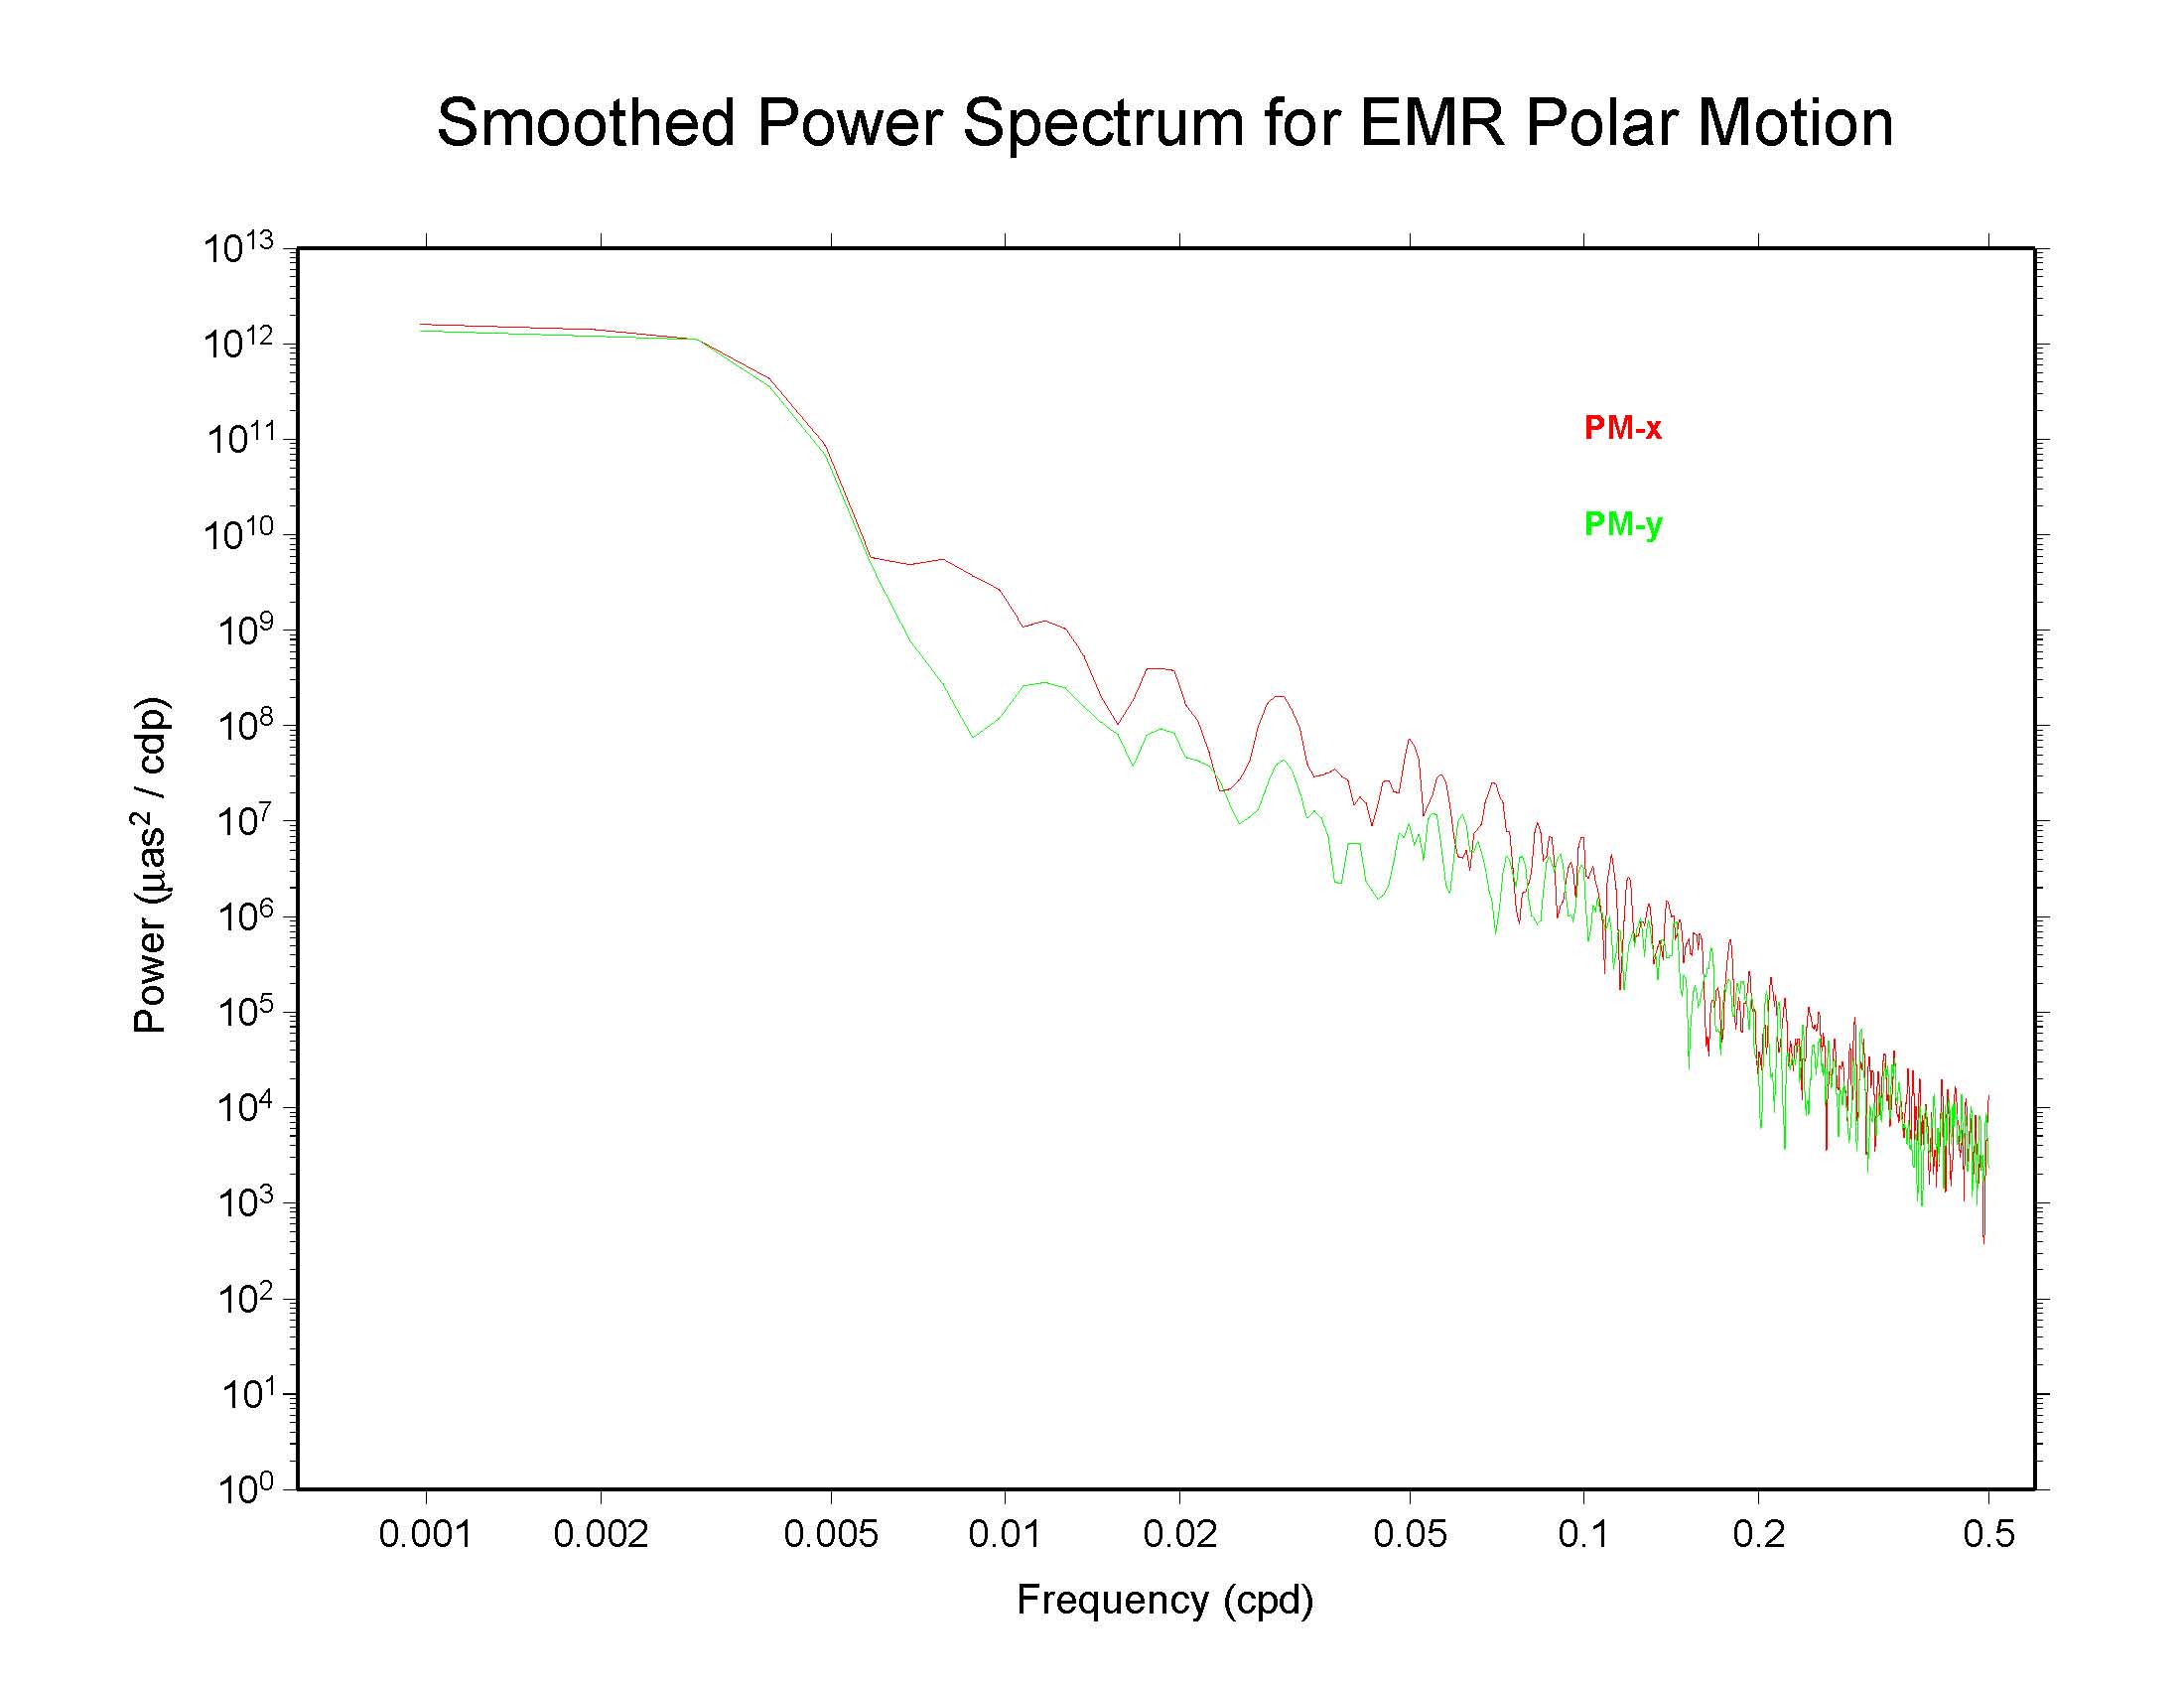 EMR polar motion spectra